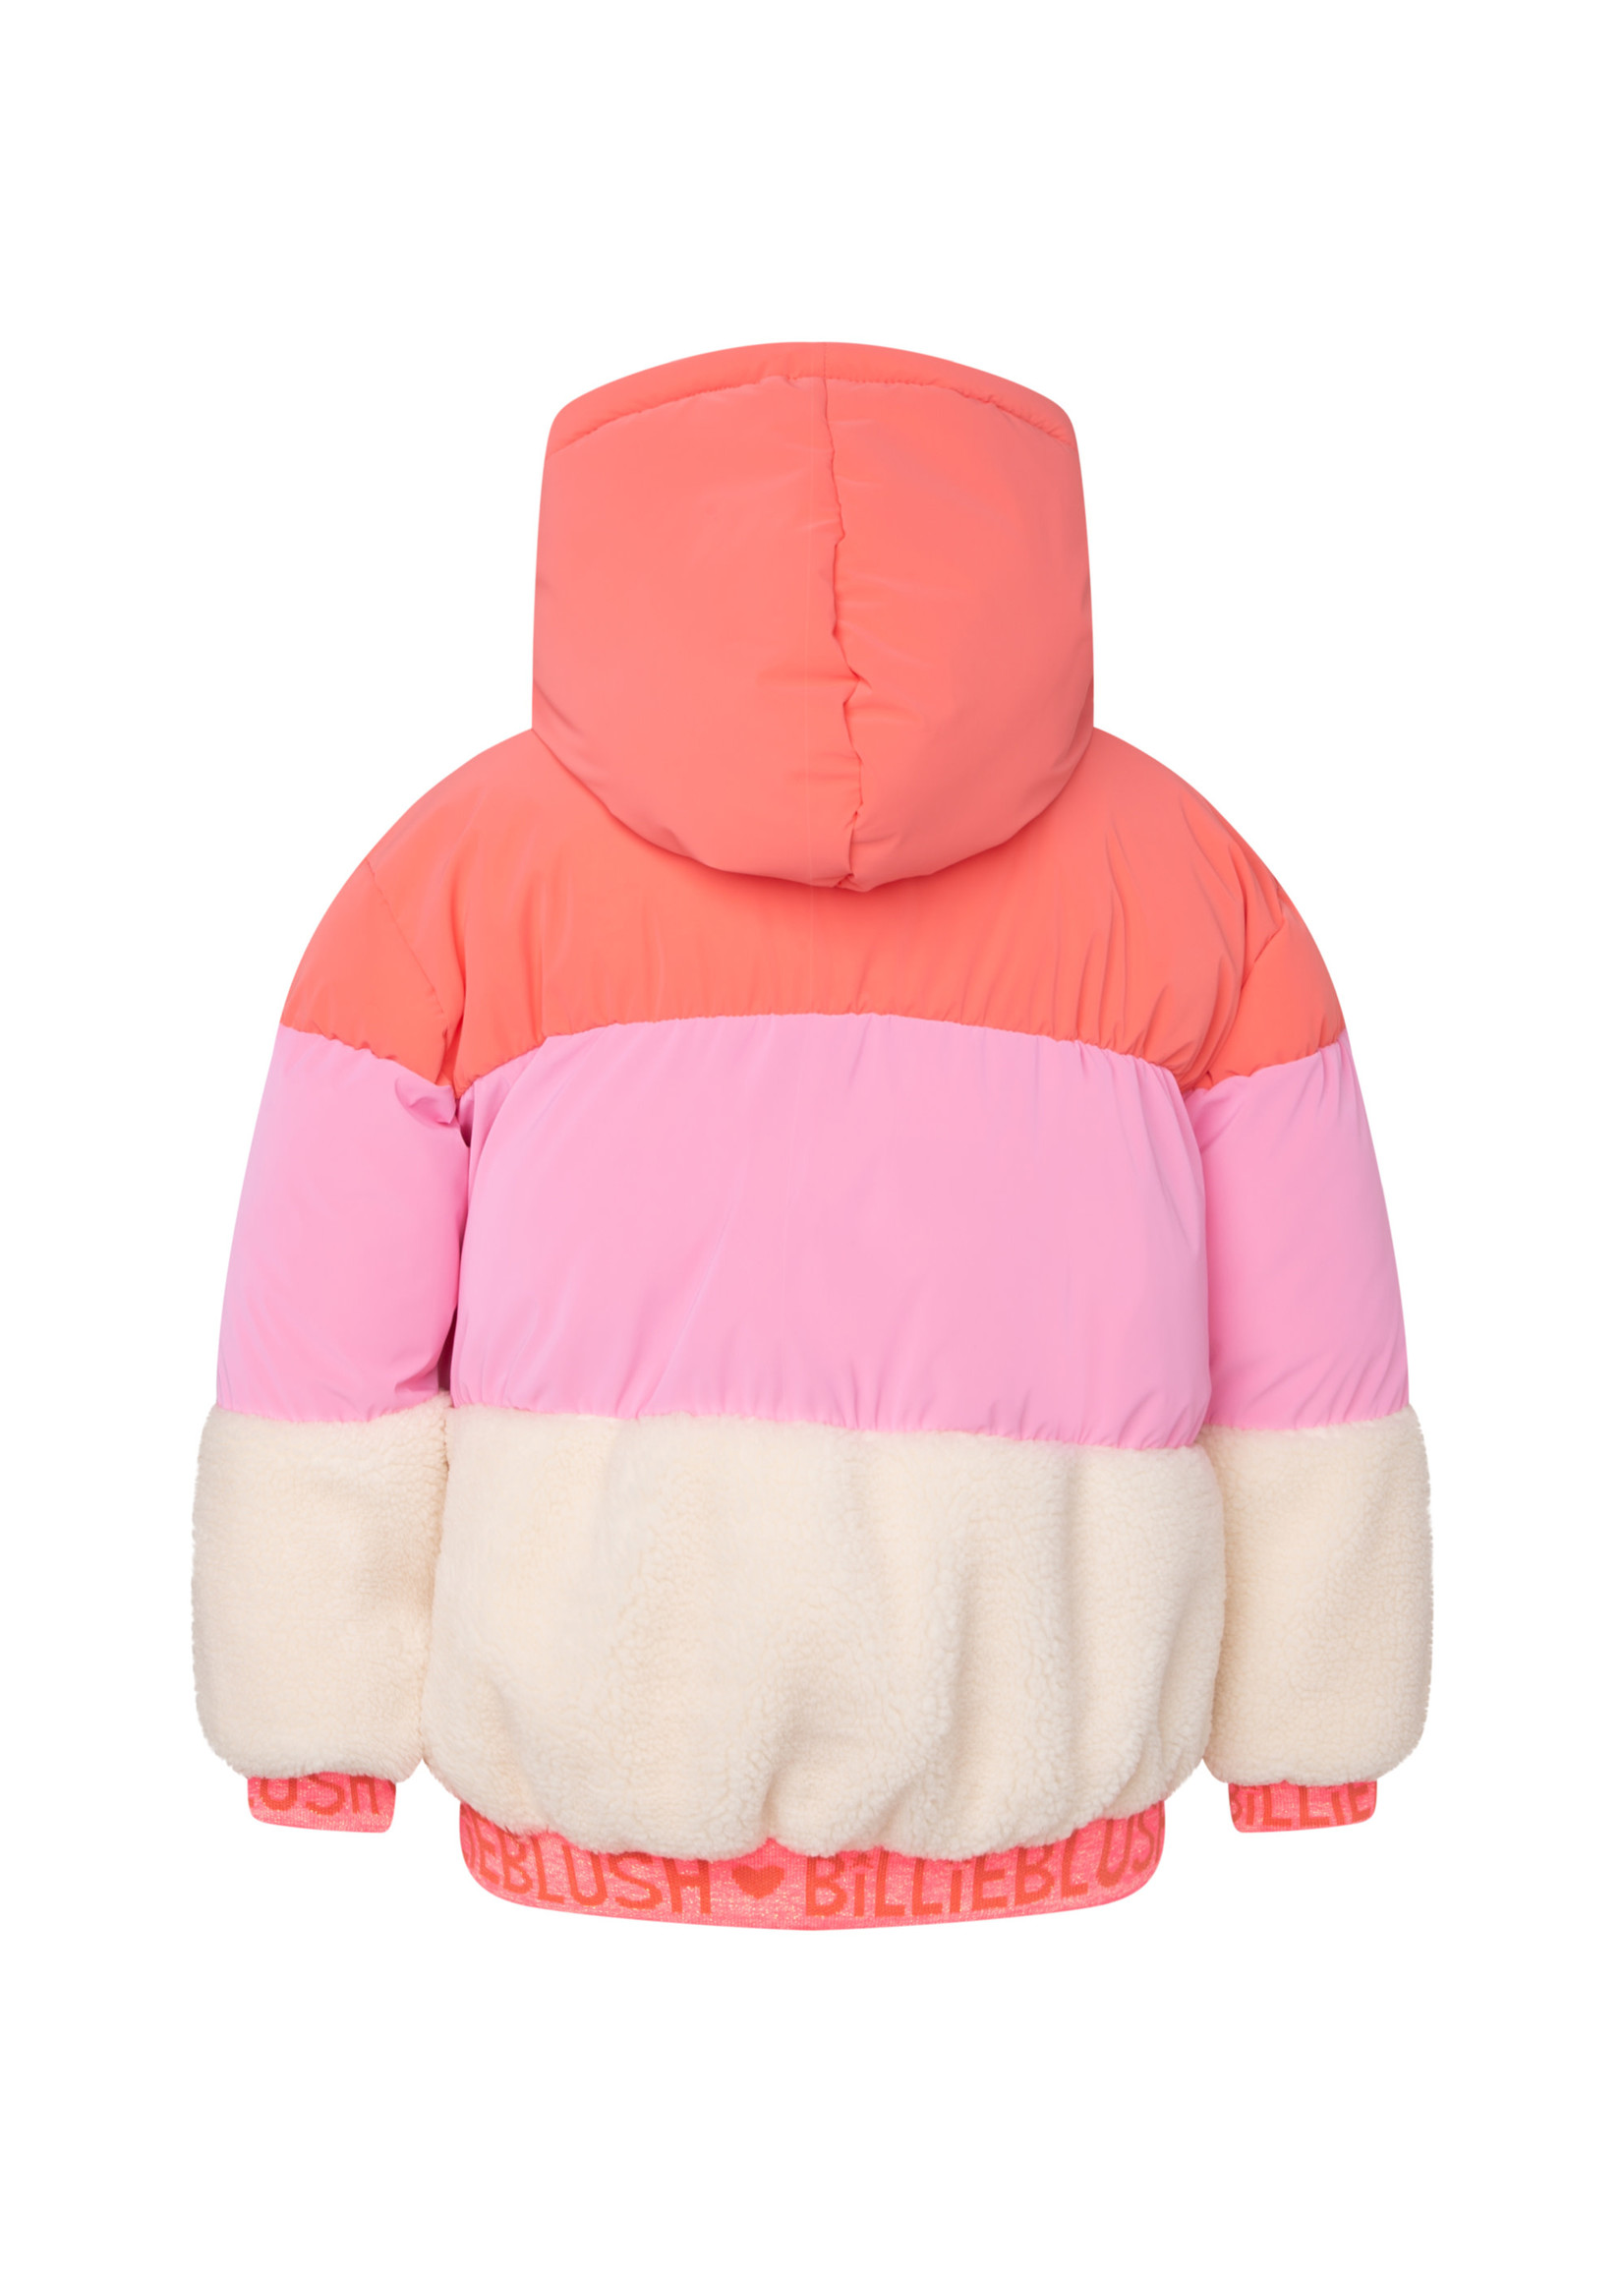 Billieblush Billieblush puffed jacket reversible fluf pink/orange - U16336